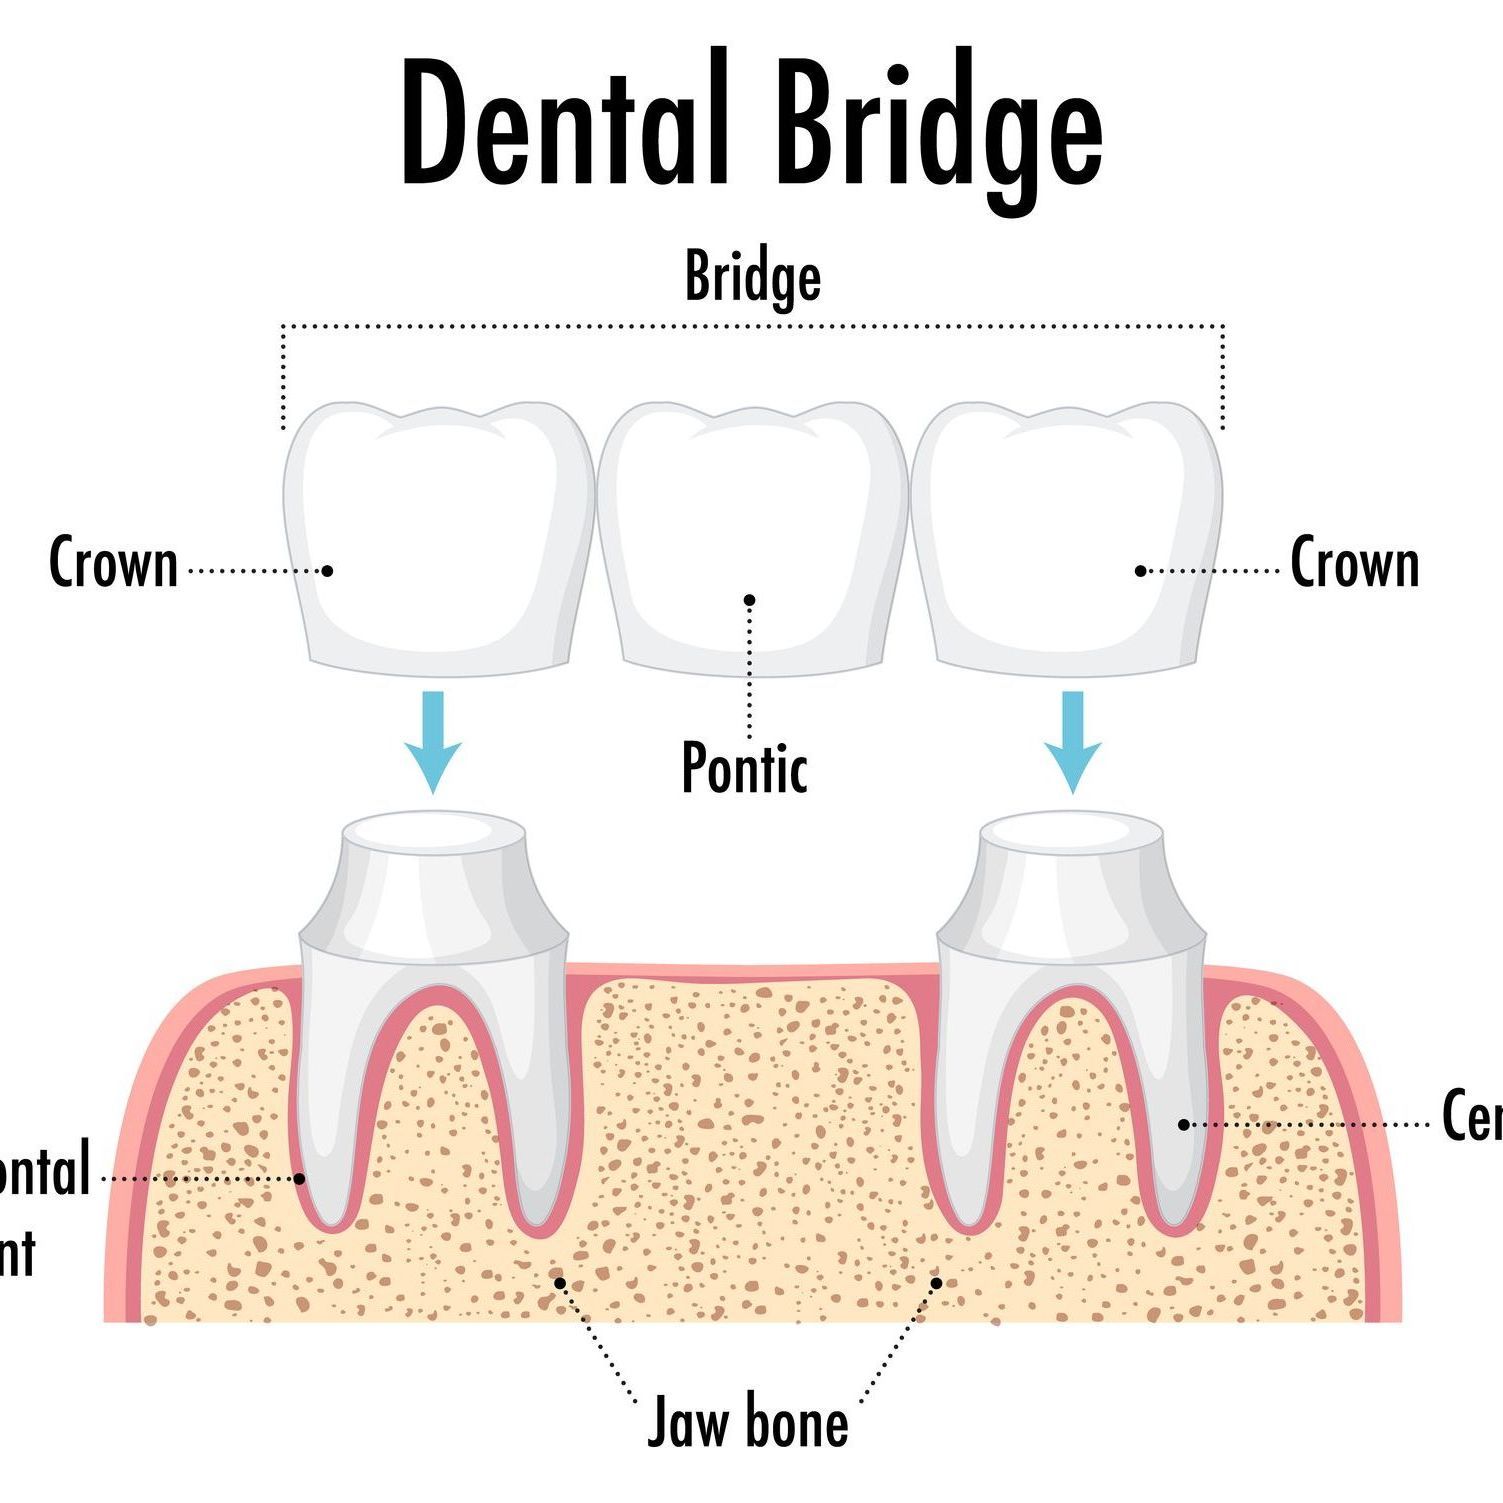 dental bridge crowns and bridges